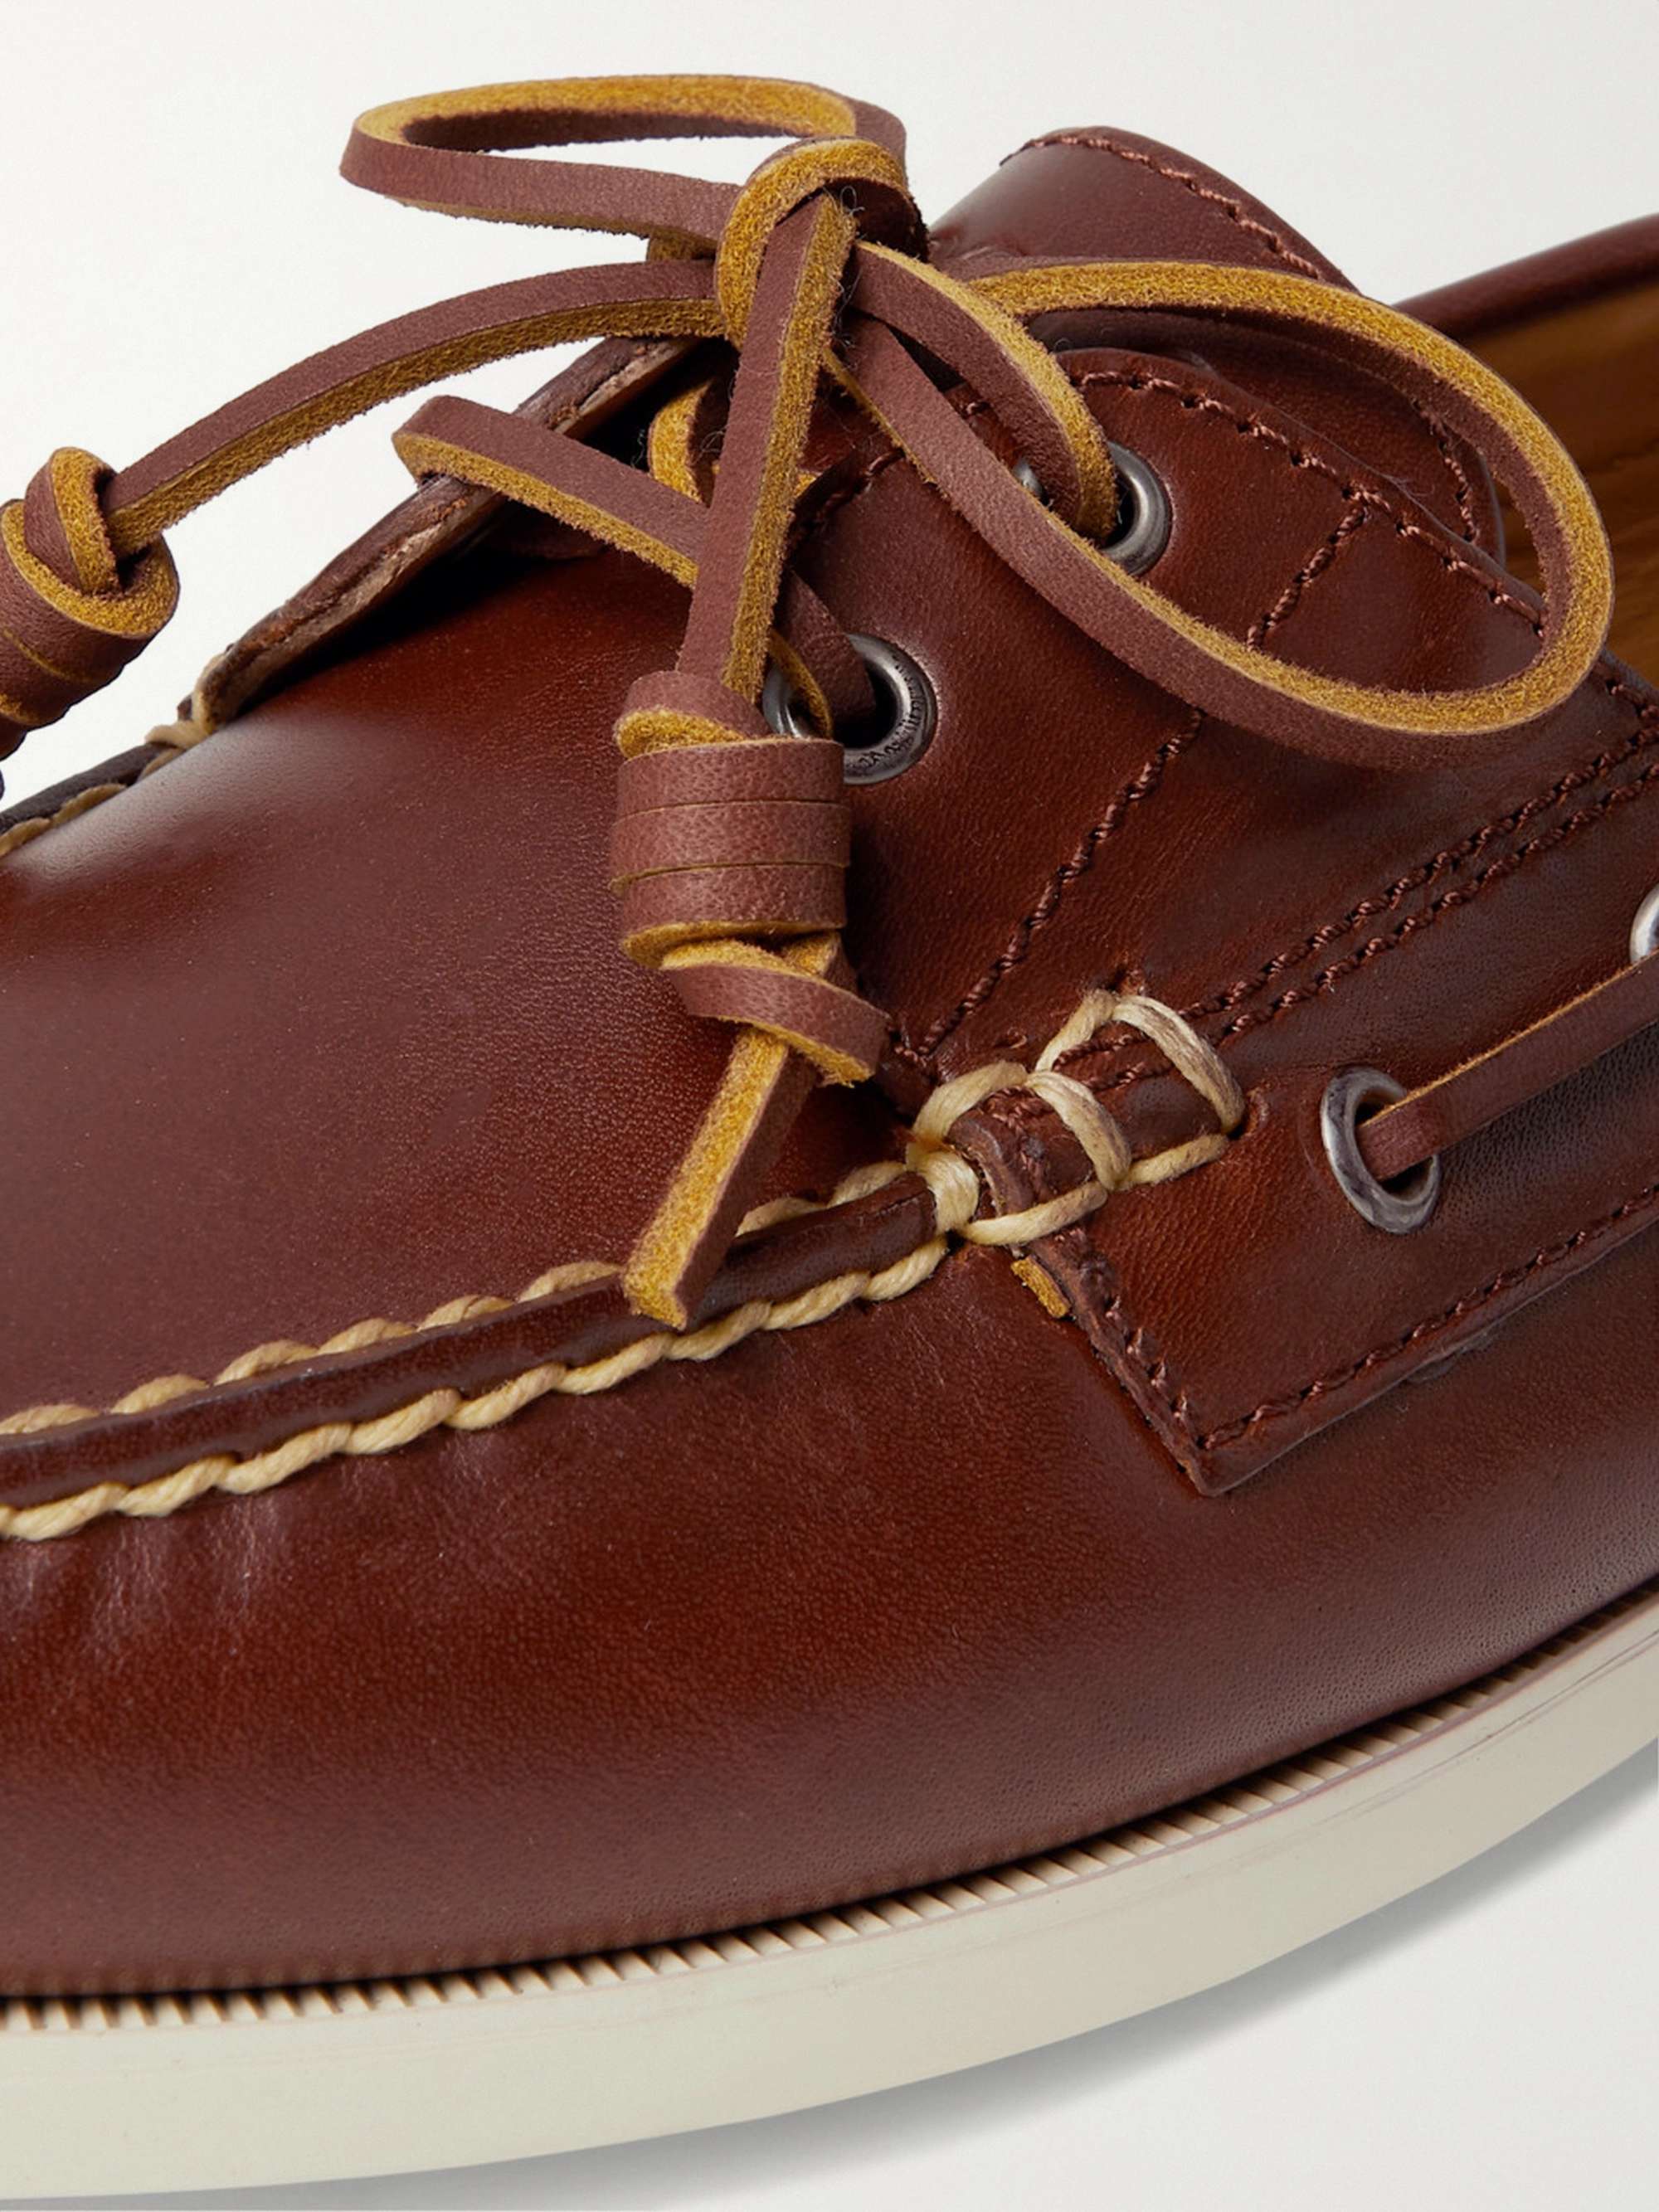 POLO RALPH LAUREN Merton Leather Boat Shoes